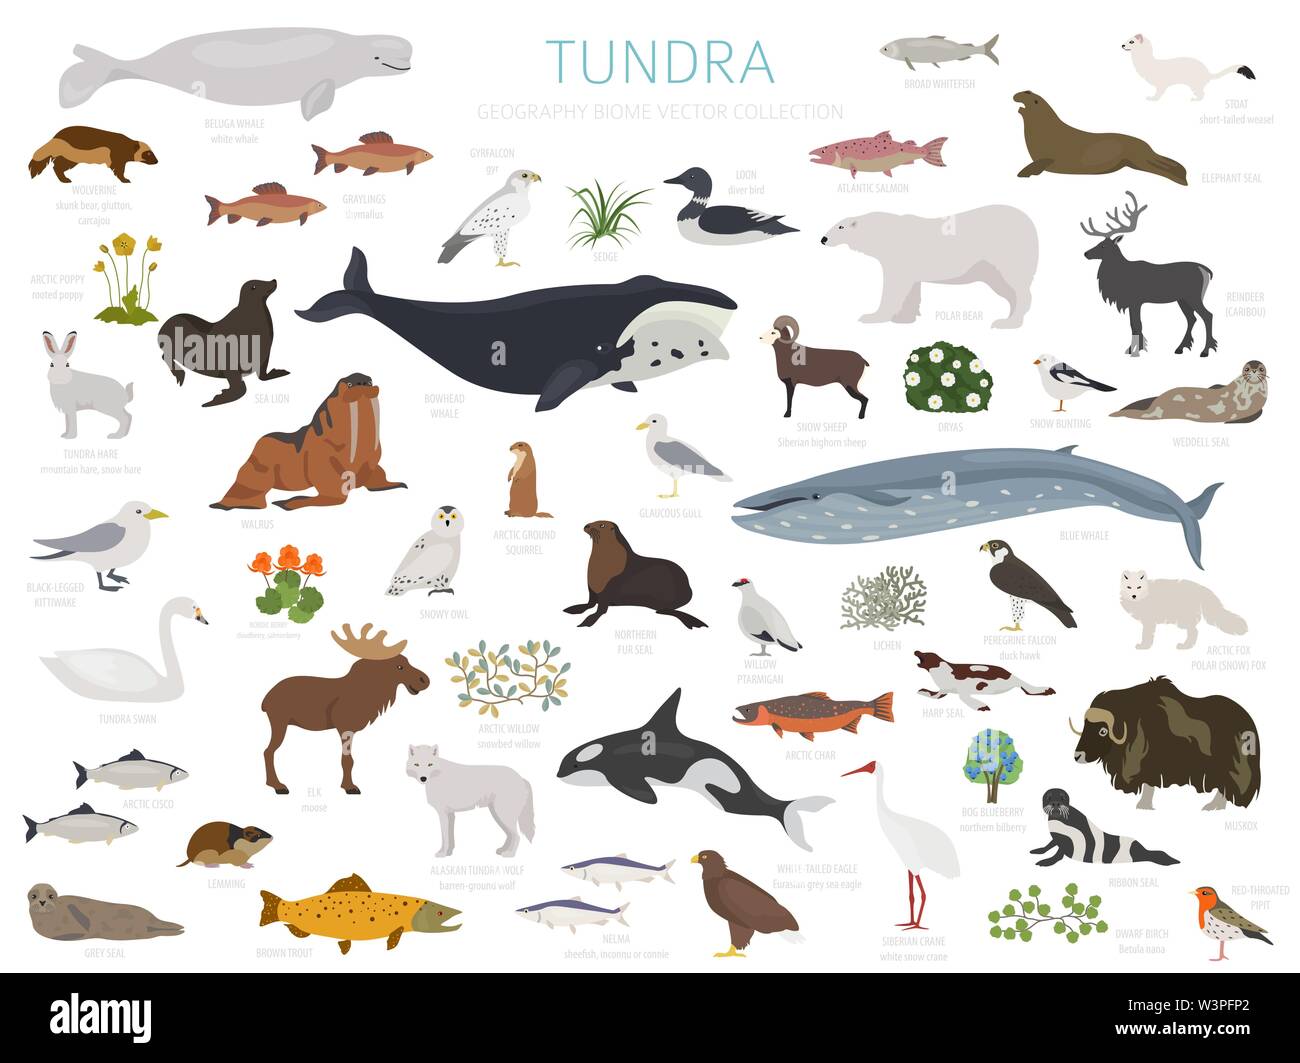 Tundra Animal Life Britannica